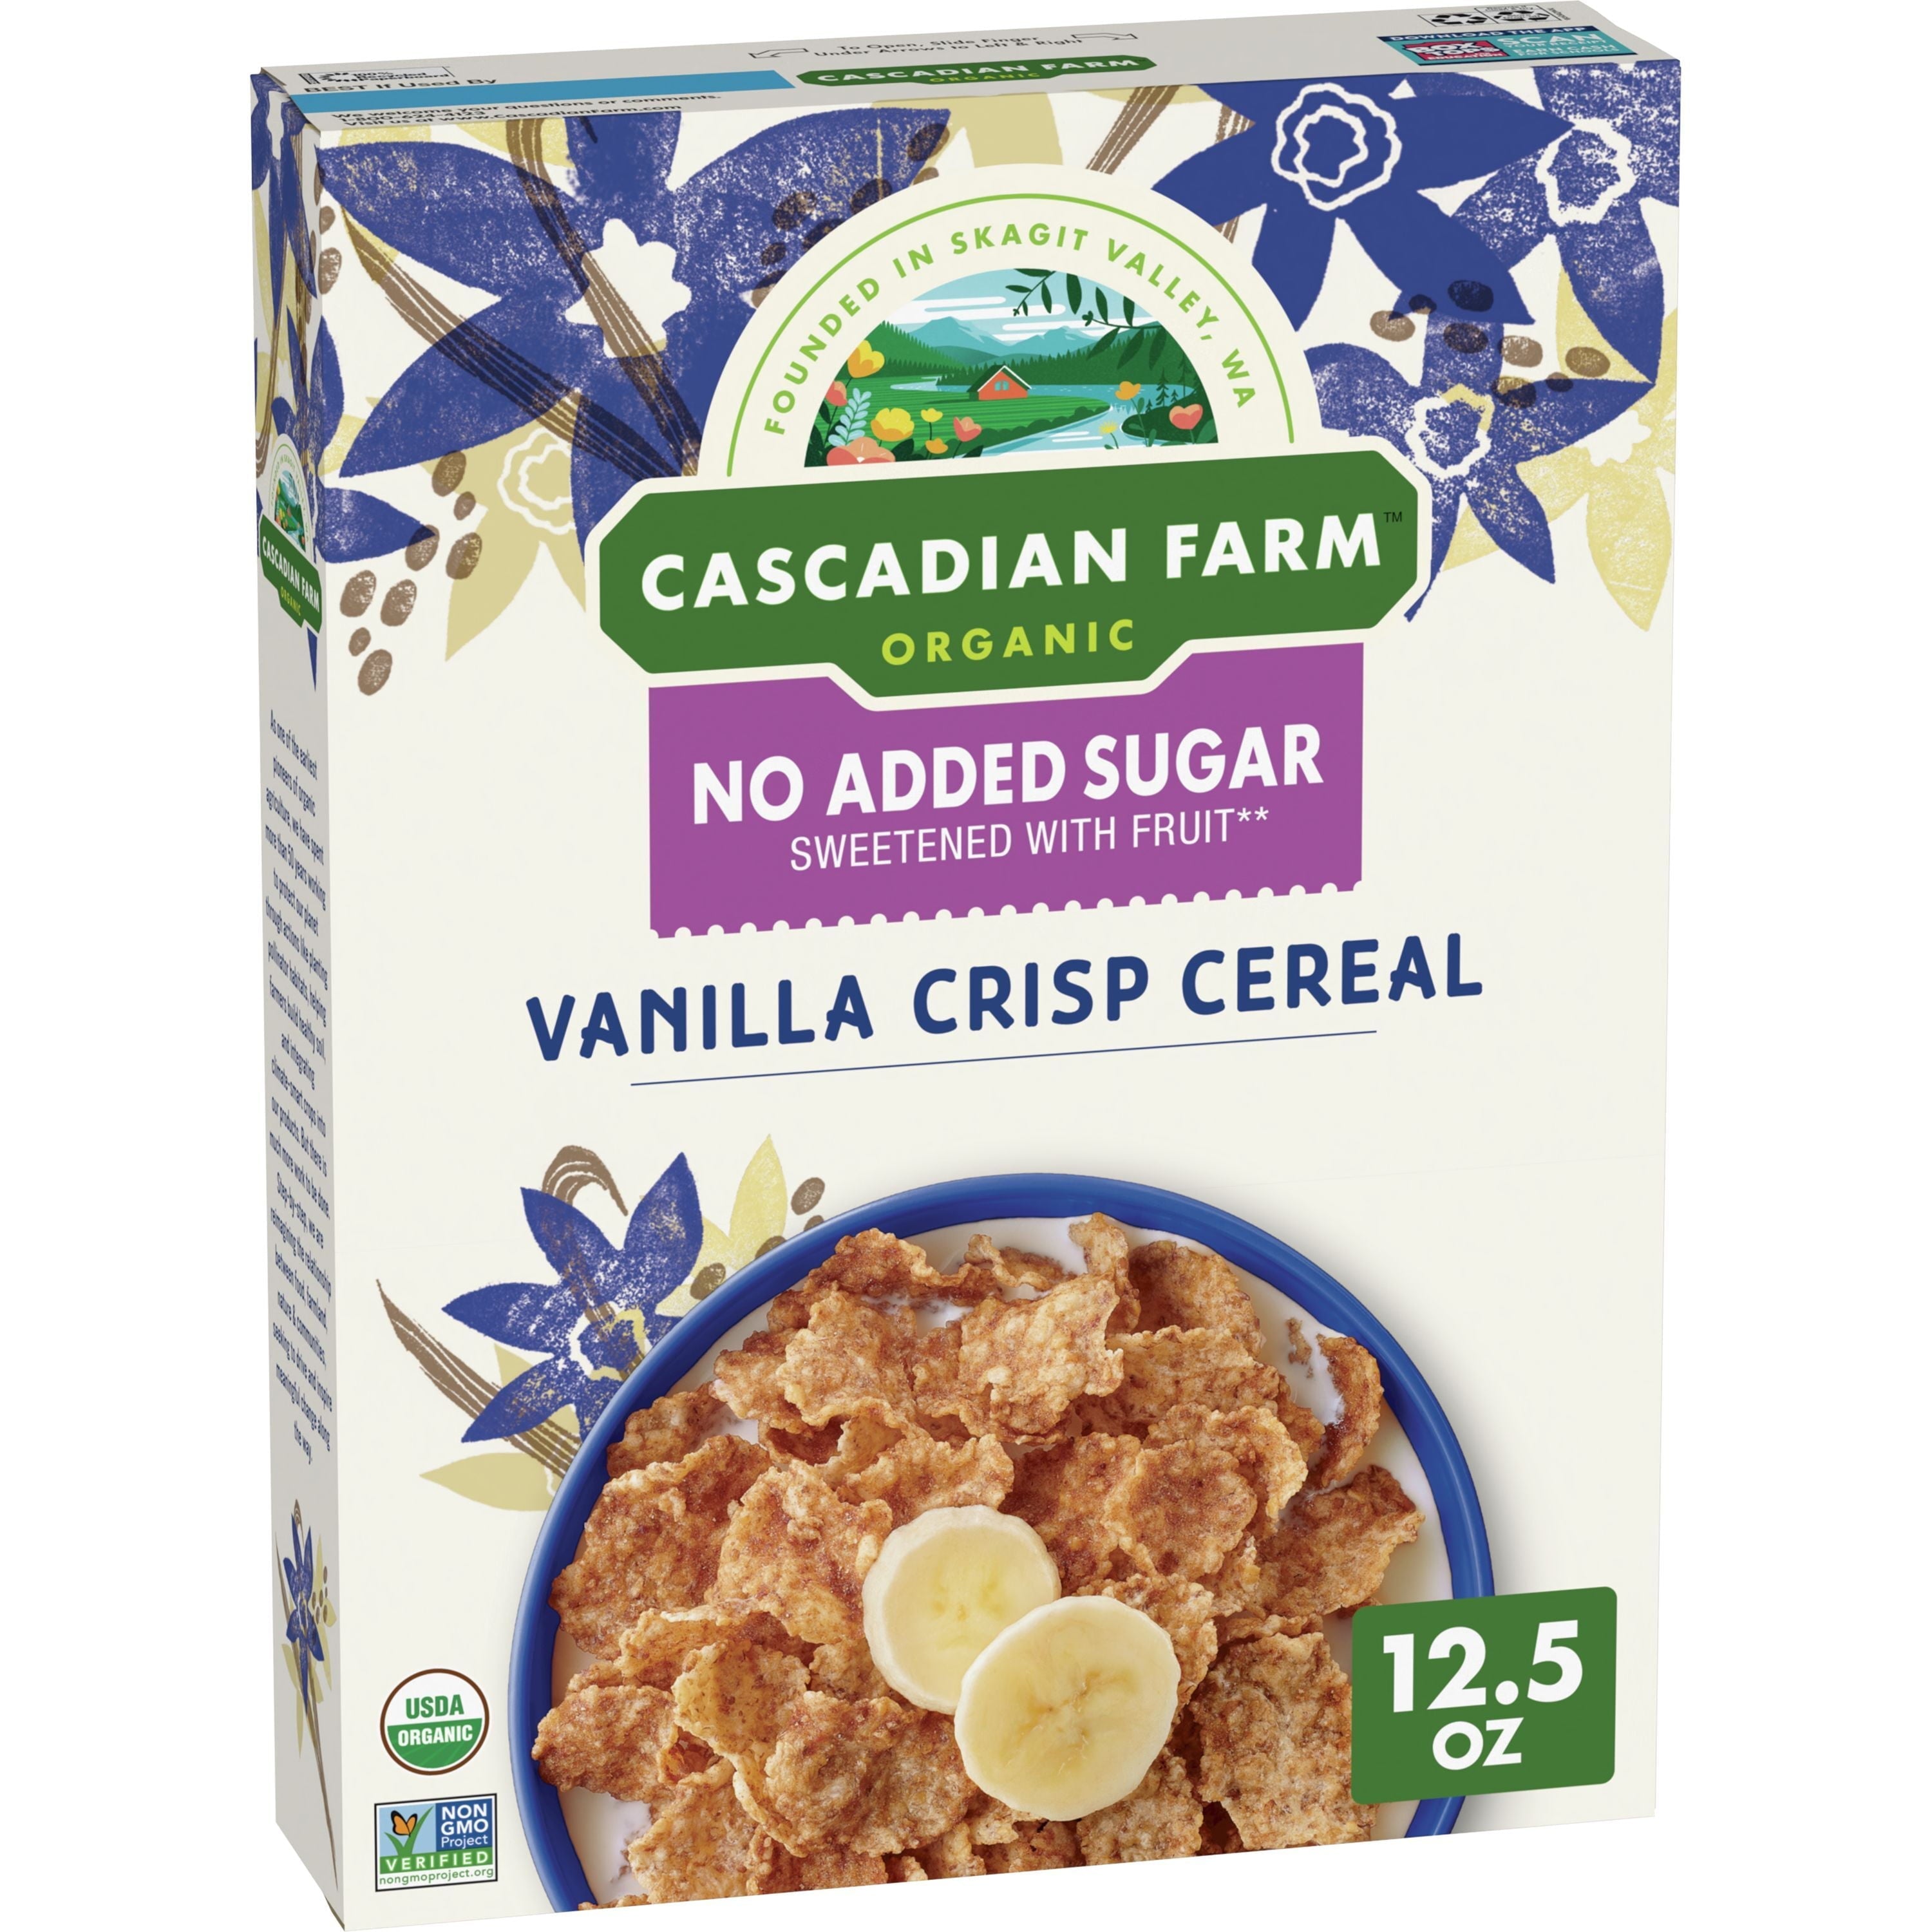 Cascadian Farm Organic Honey Nut O's Cereal 9.5 oz Pack of 2